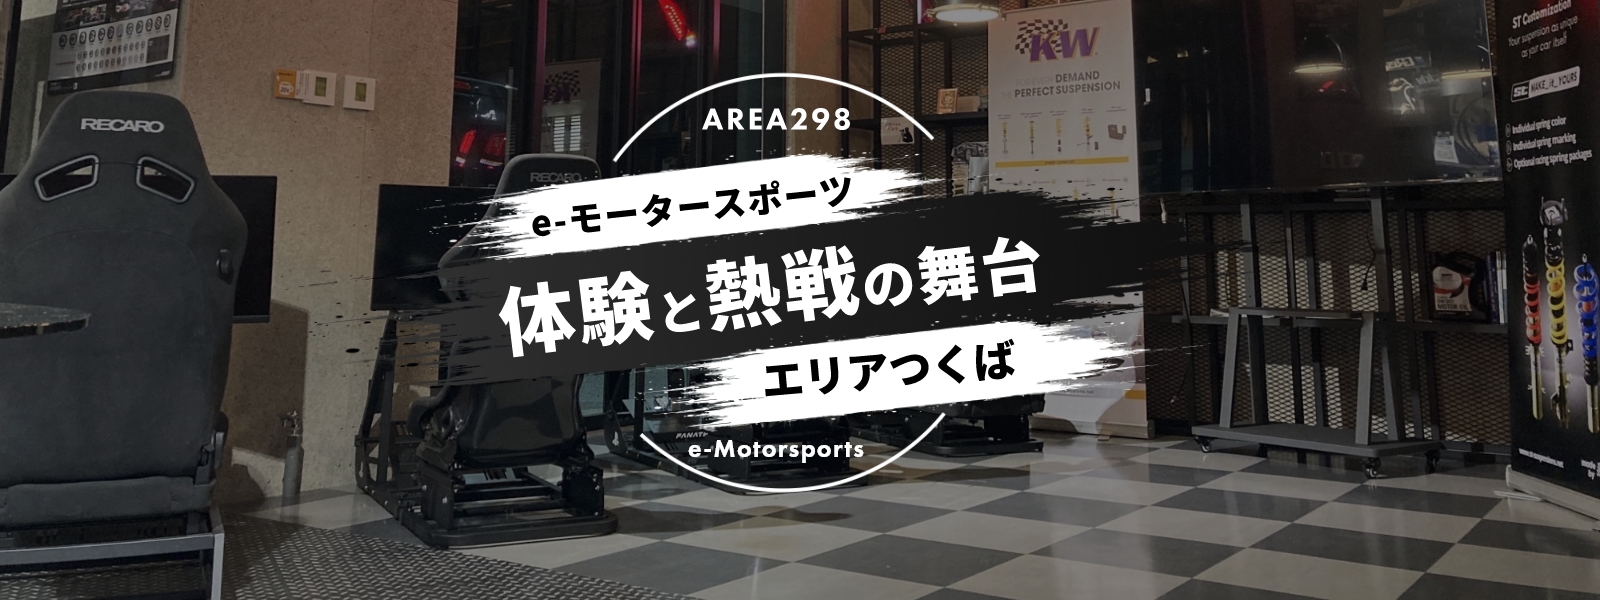 e-Motorsports AREA298 エリアつくば